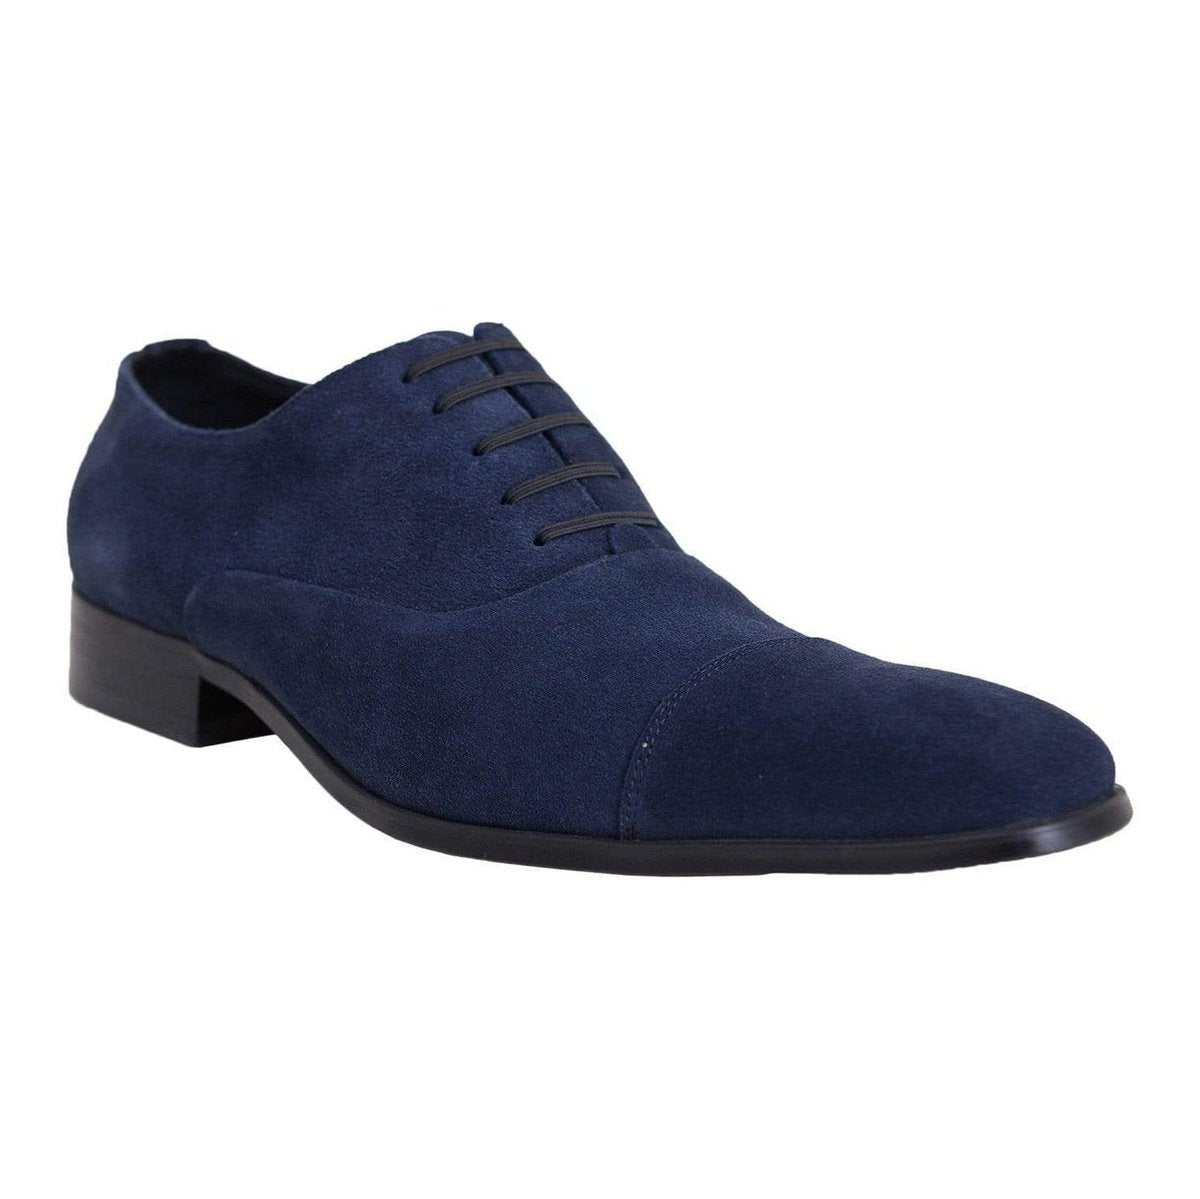 Carrucci Shoes For Amazon 13 D-M Carrucci Mens Navy Blue Suede Cap Toe Oxford Leather Dress Shoes